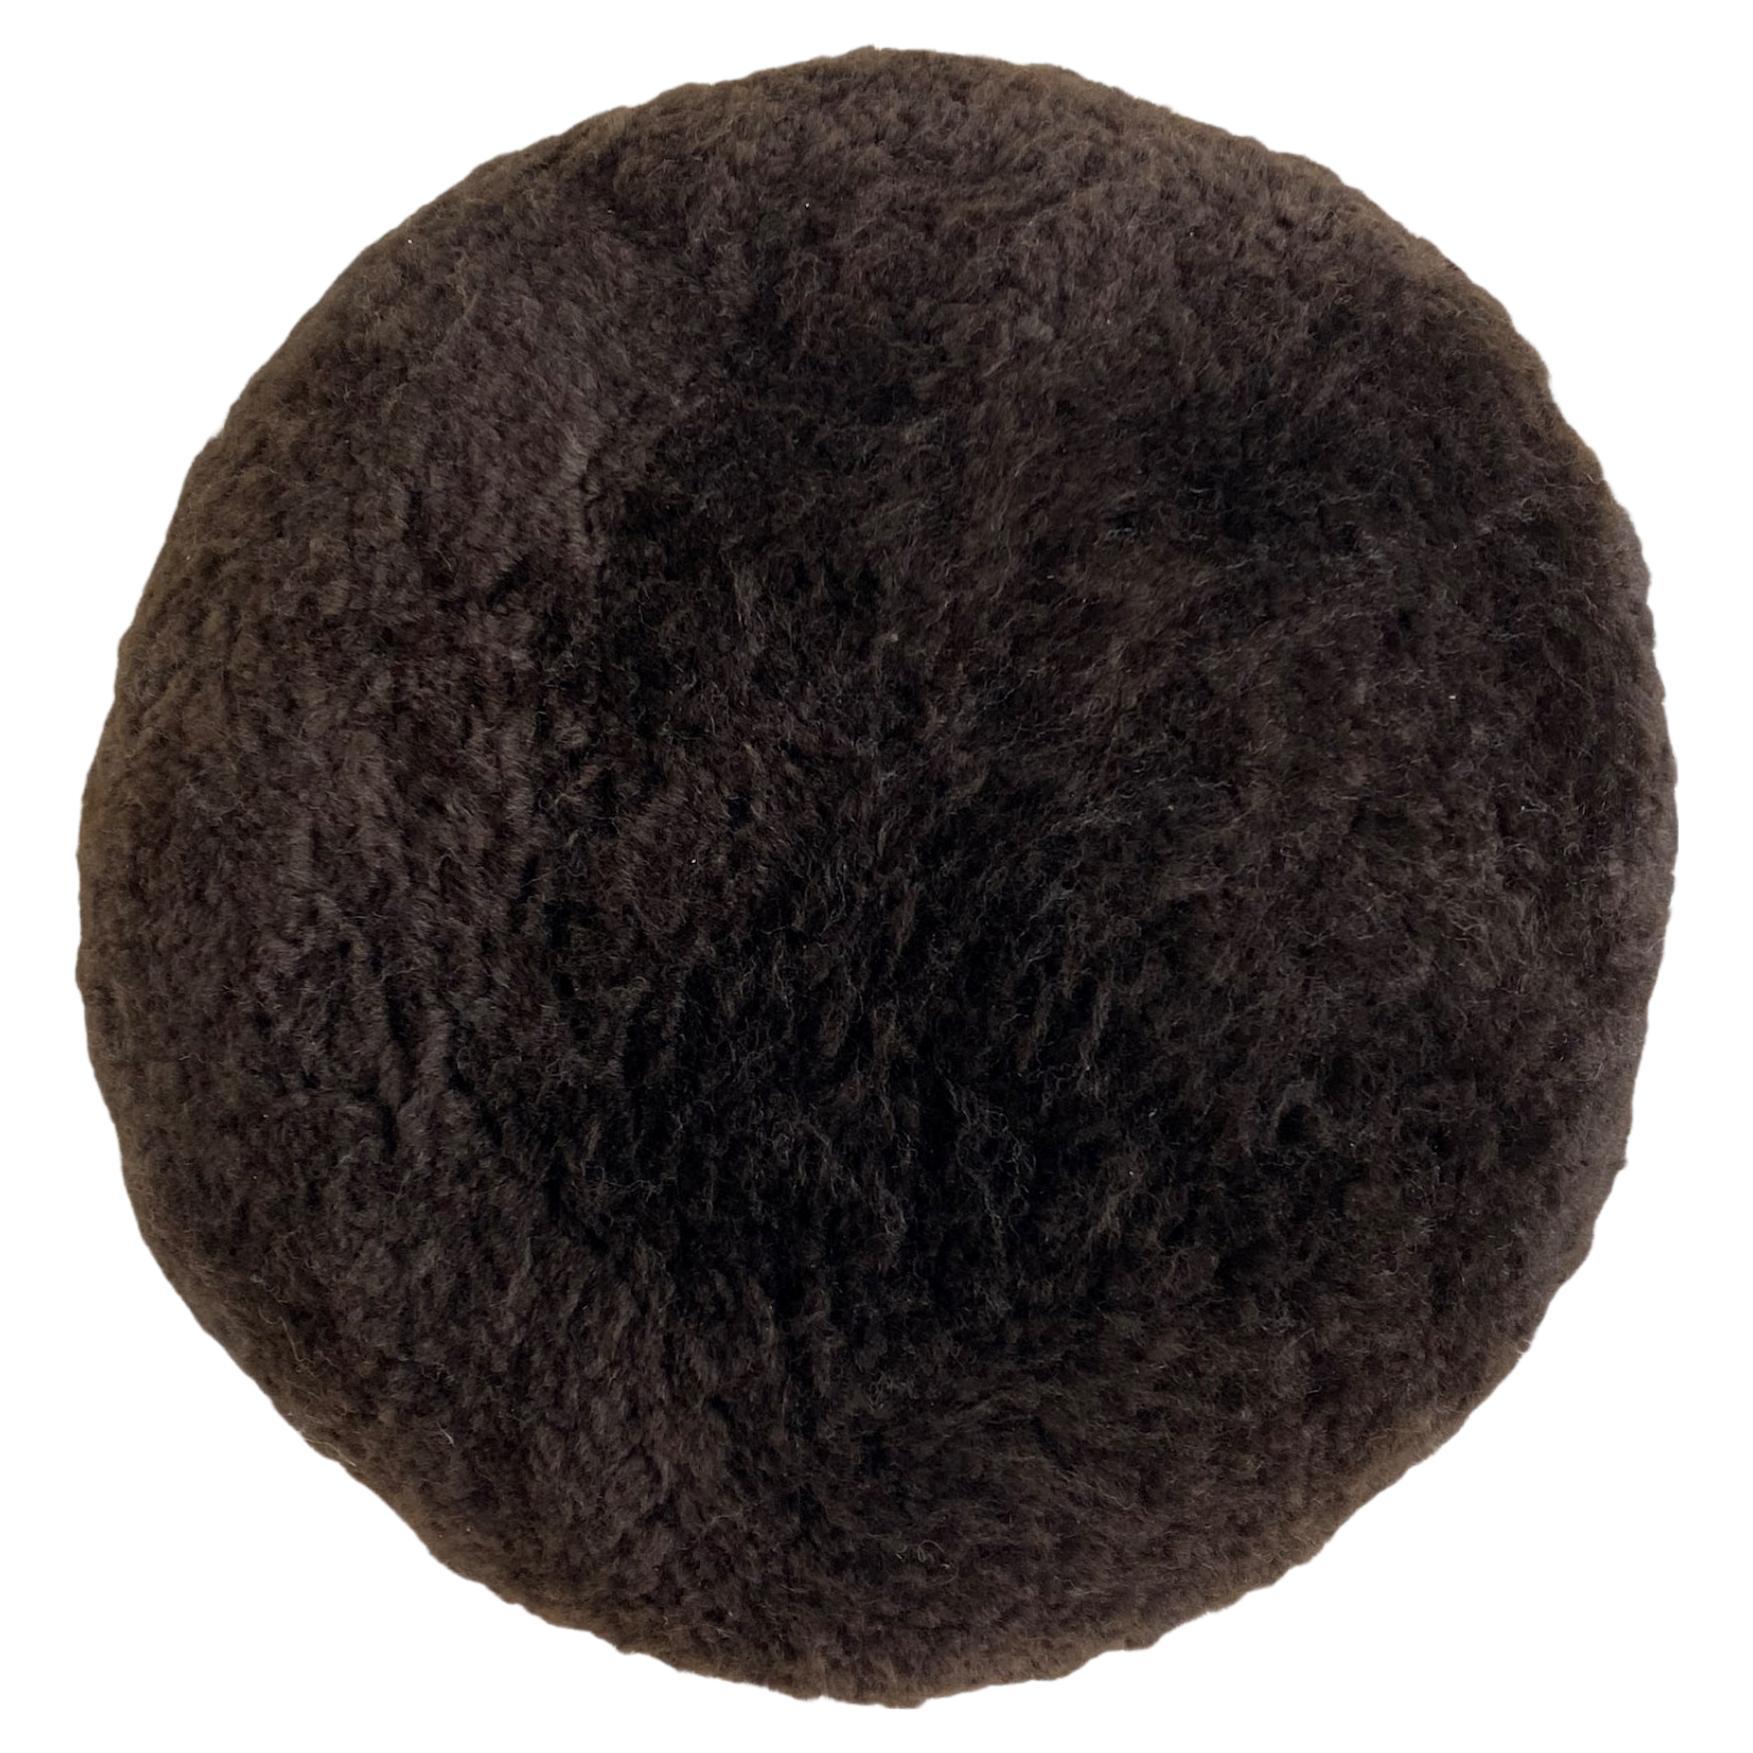 Round Pillow New Zealand Lambskin - 14" Brown Chestnut For Sale